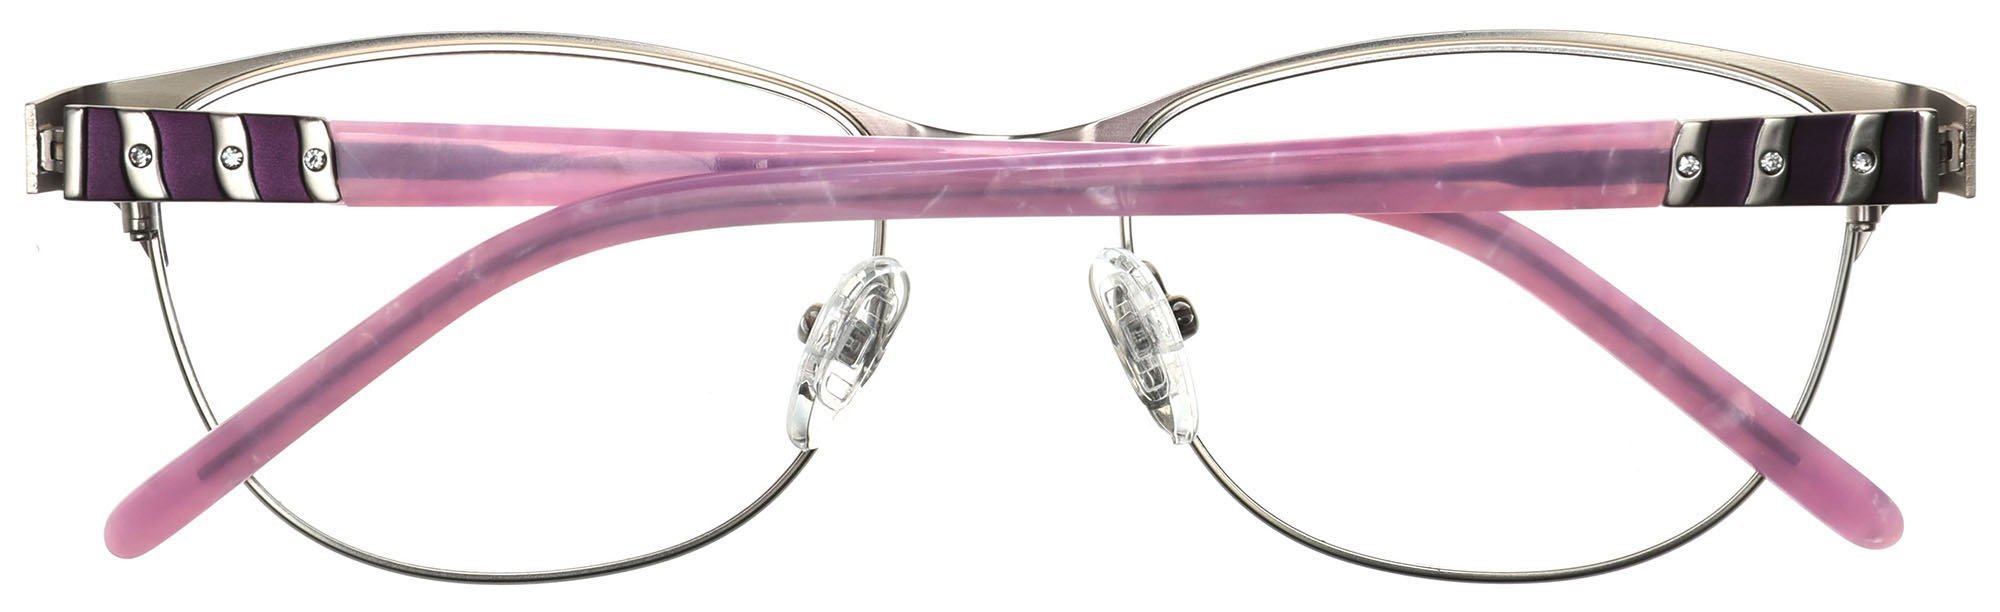 Tango Optics Browline Metal Eyeglasses Frame Luxe RX Stainless Steel Katharine Burr Blodgett Purple For Prescription Lens-Samba Shades